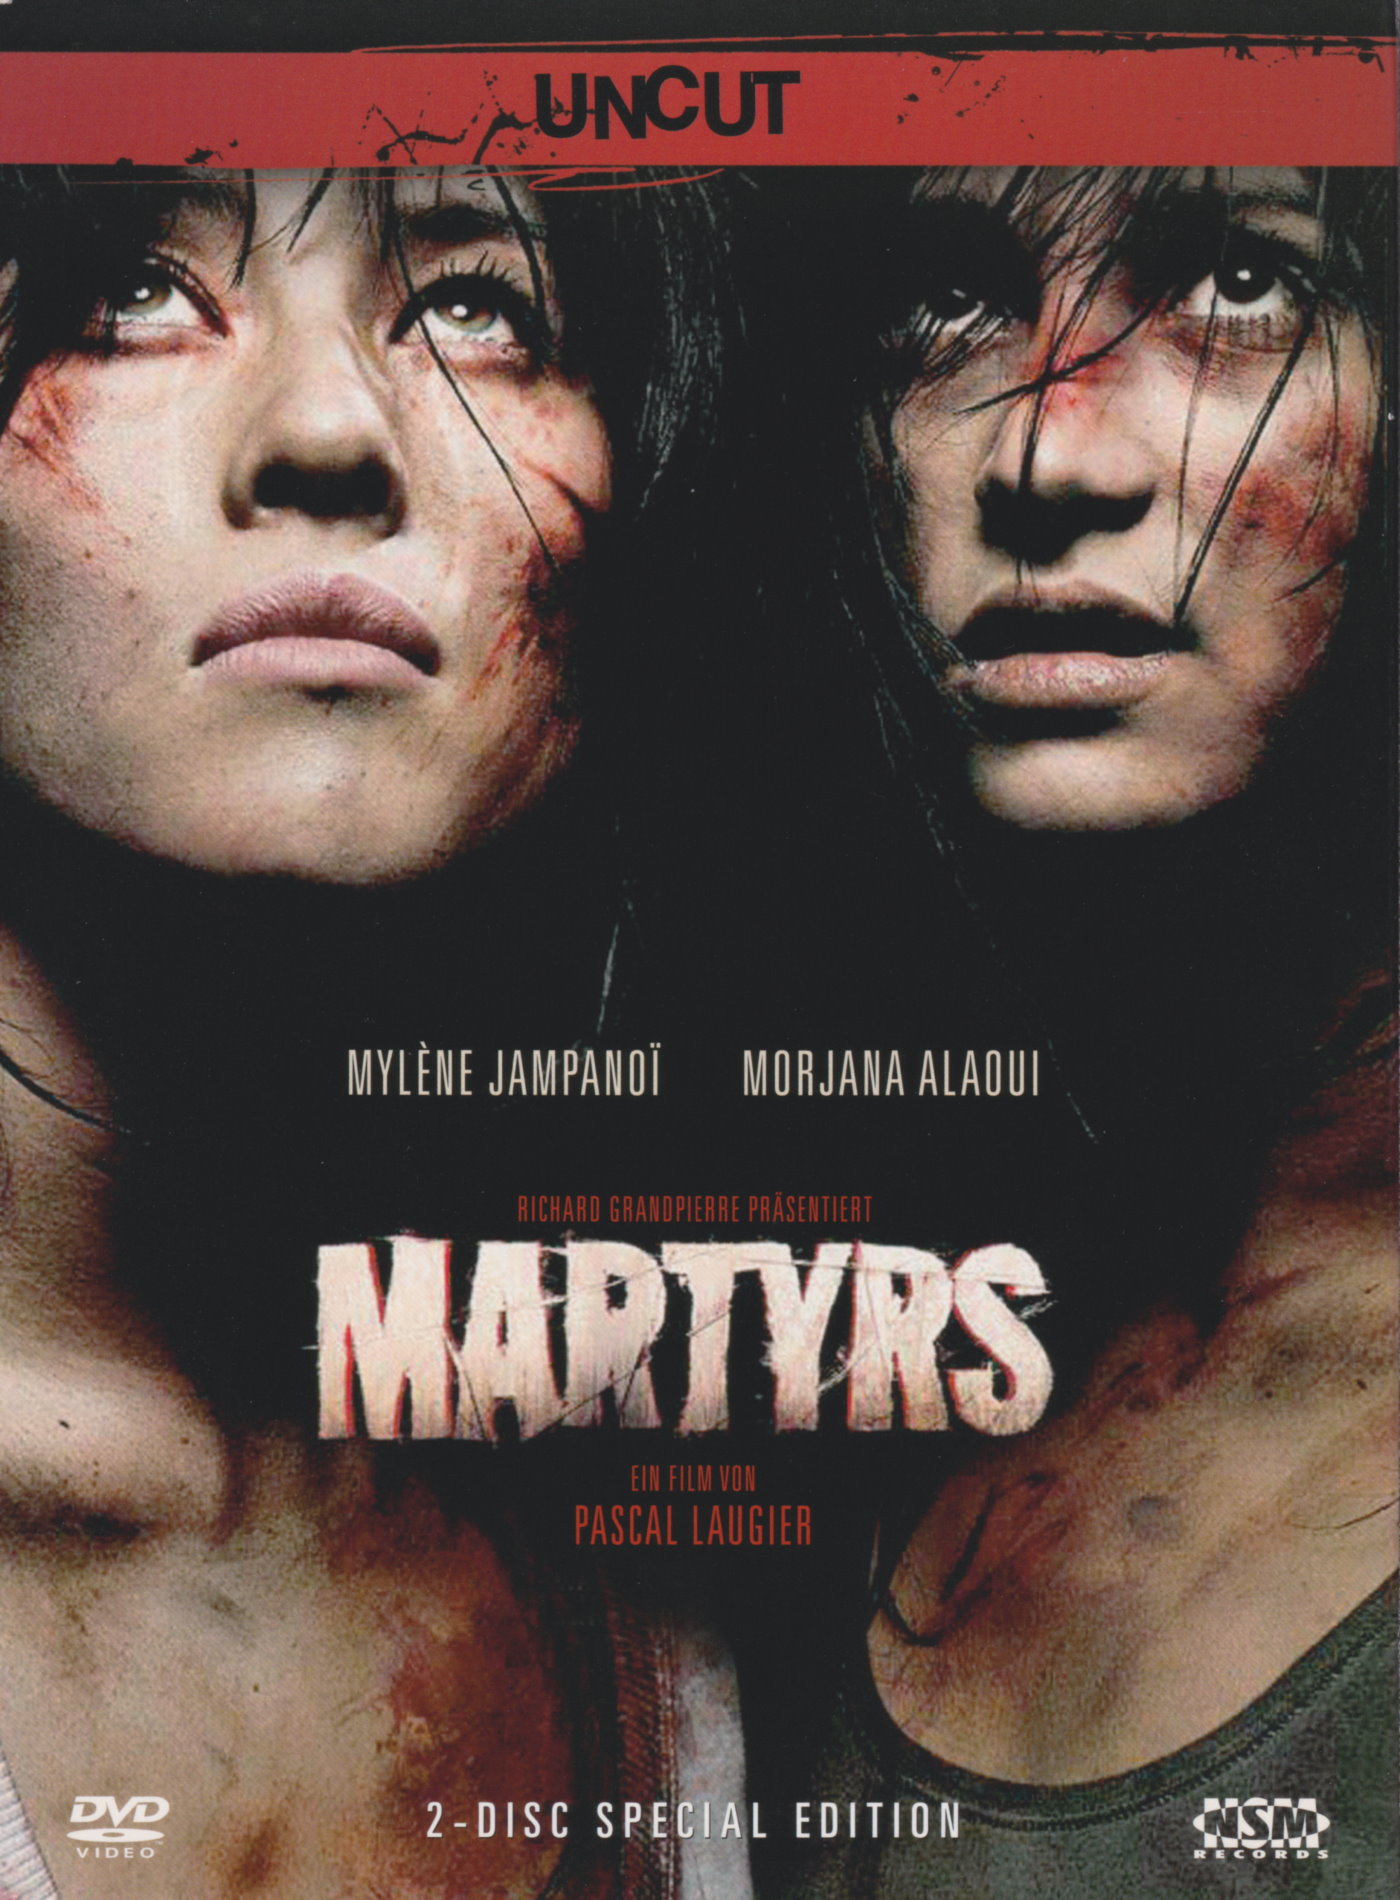 Cover - Martyrs.jpg